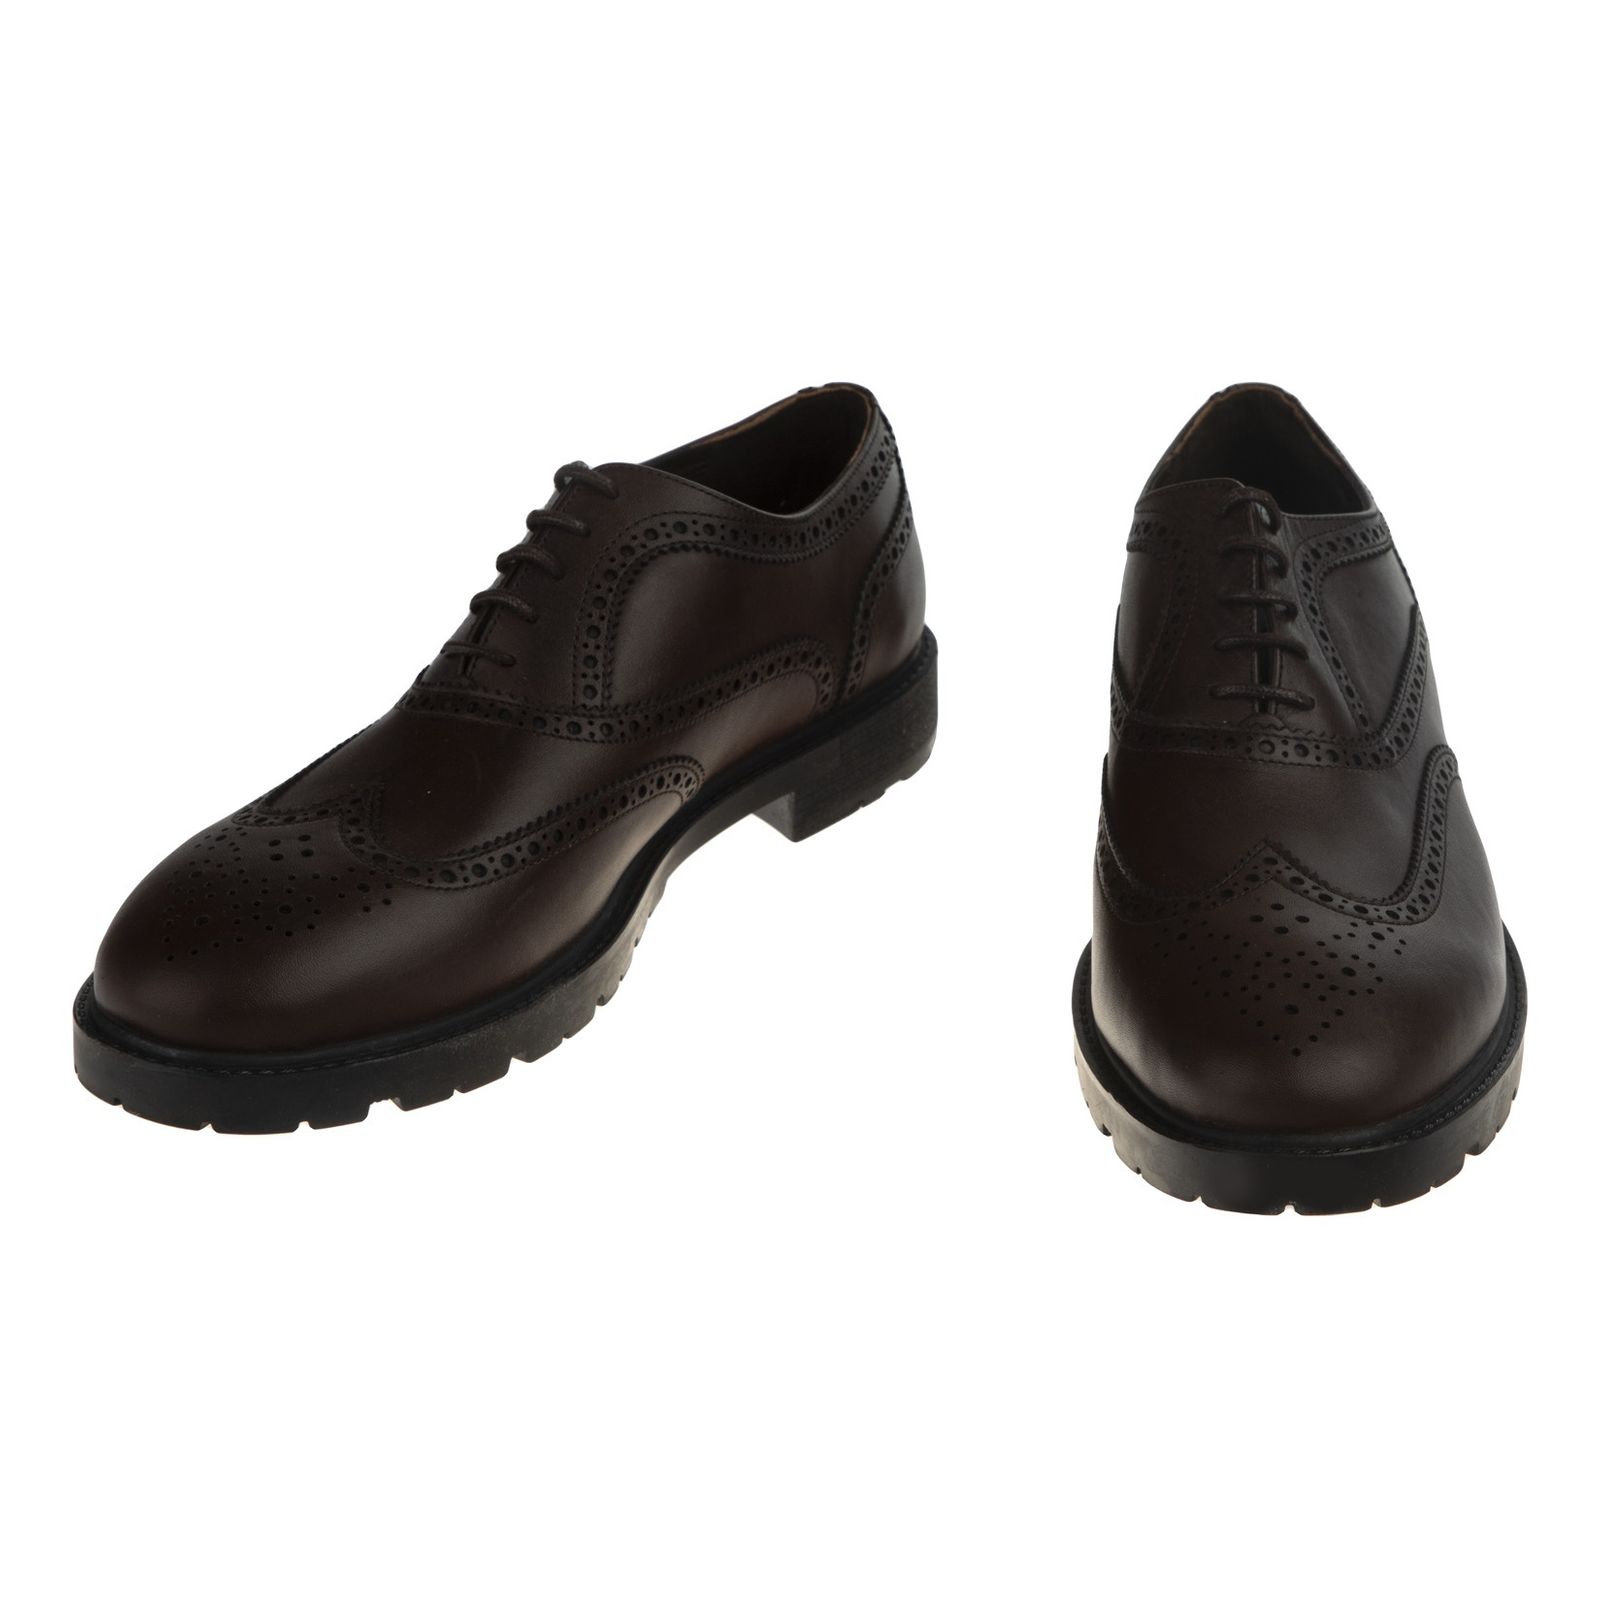 کفش مردانه بلوط مدل 7174A503-104 - قهوه ای - 4